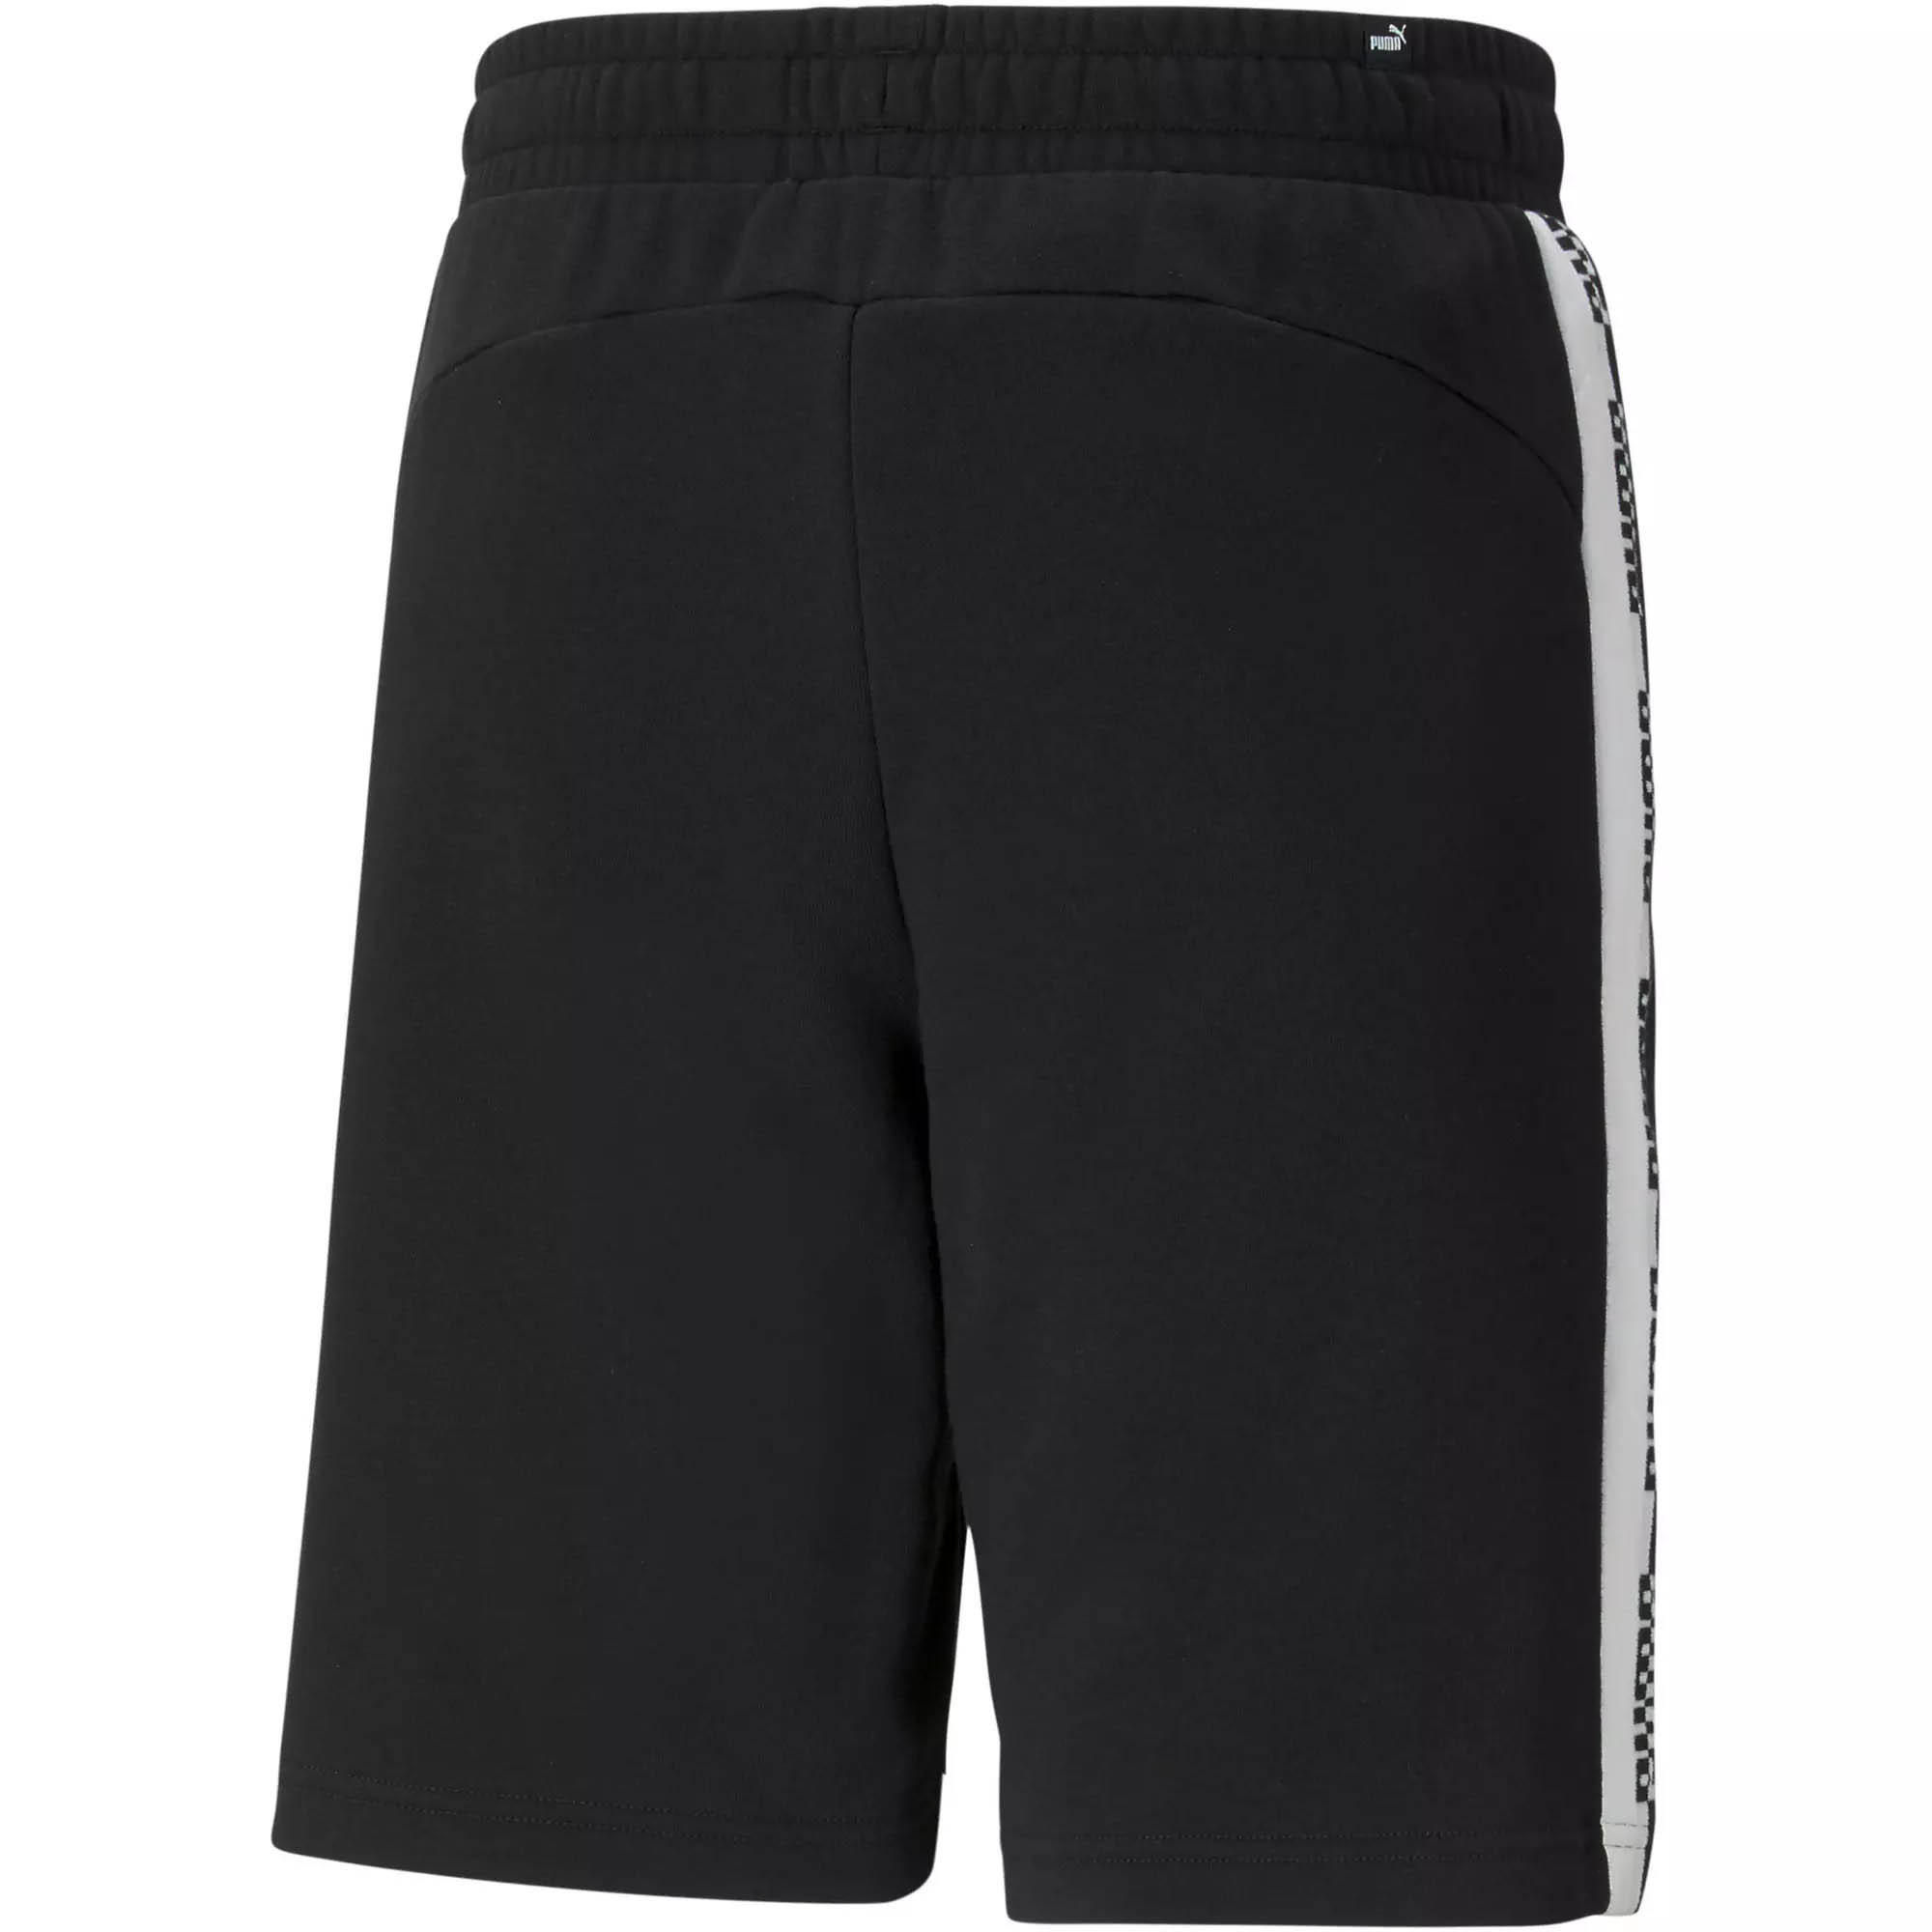 PUMA Amplified Shorts 9 TR Sporthose Trainingshose Übergröße 585786 01 schwarz